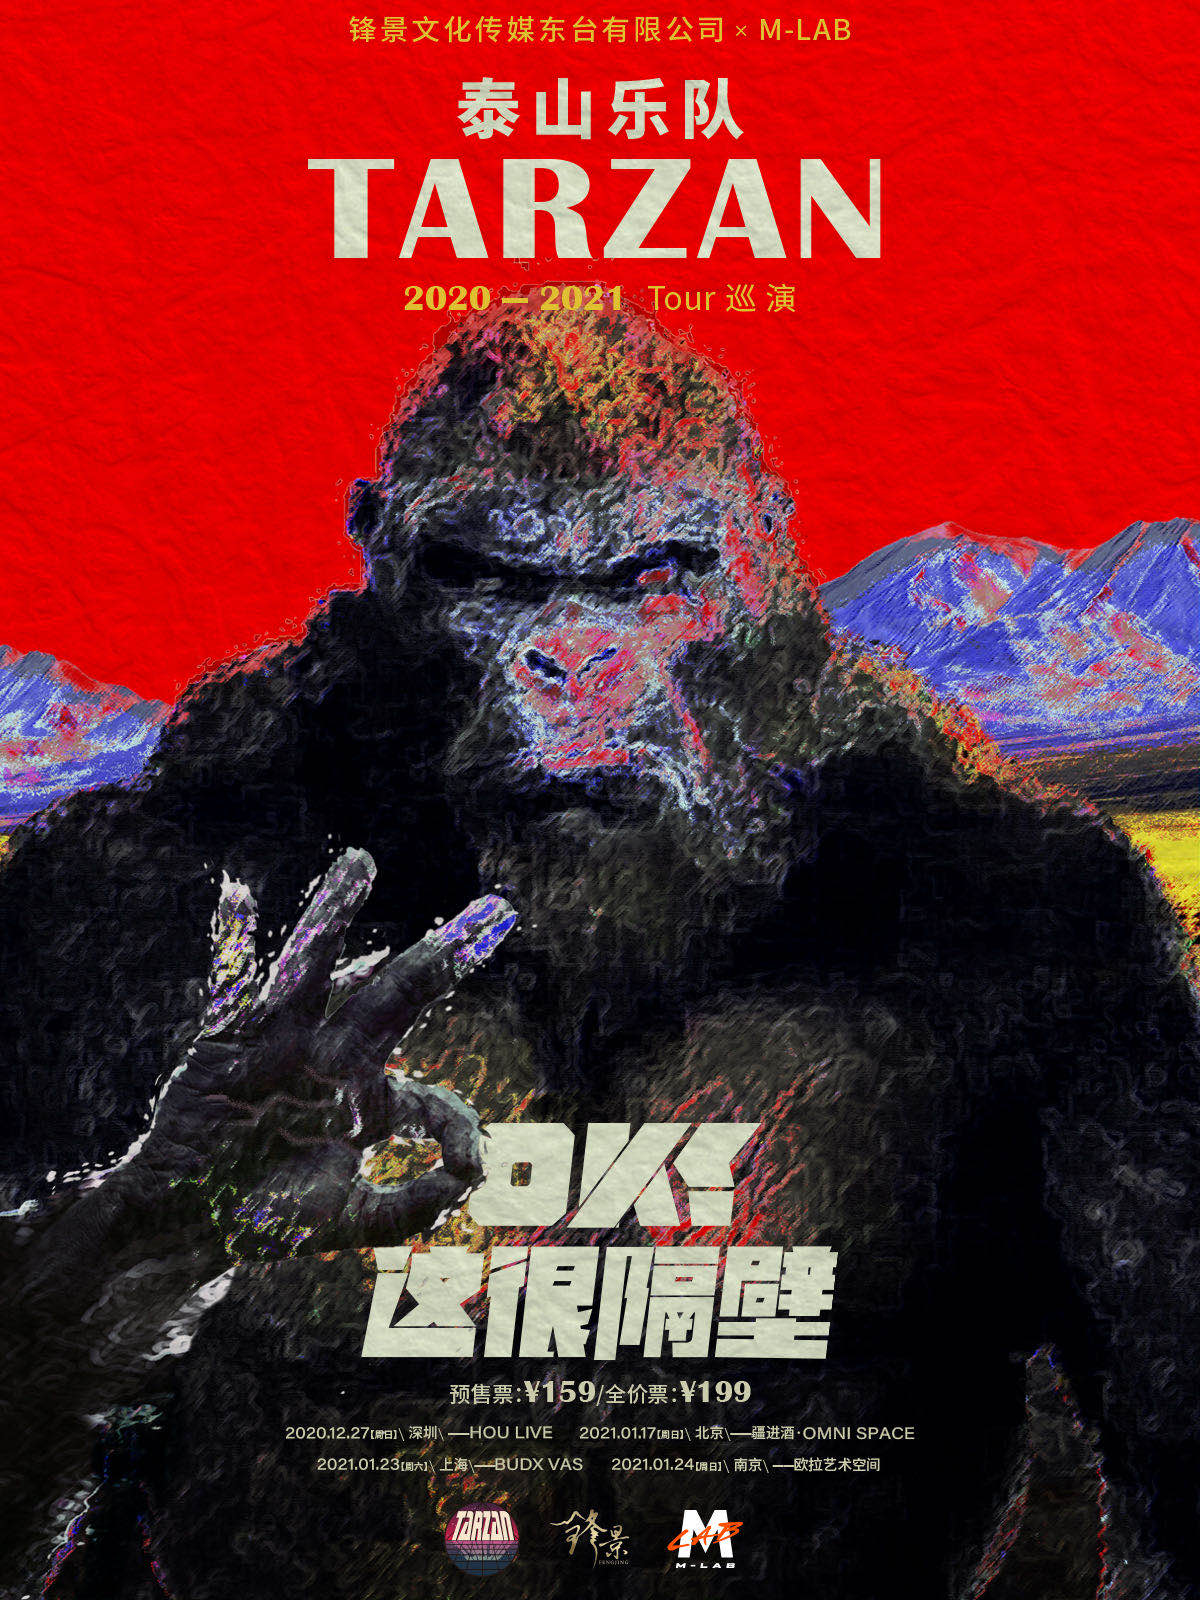 「Tarzan泰山乐队」《OK！这很隔壁》2020-2021巡演LVH